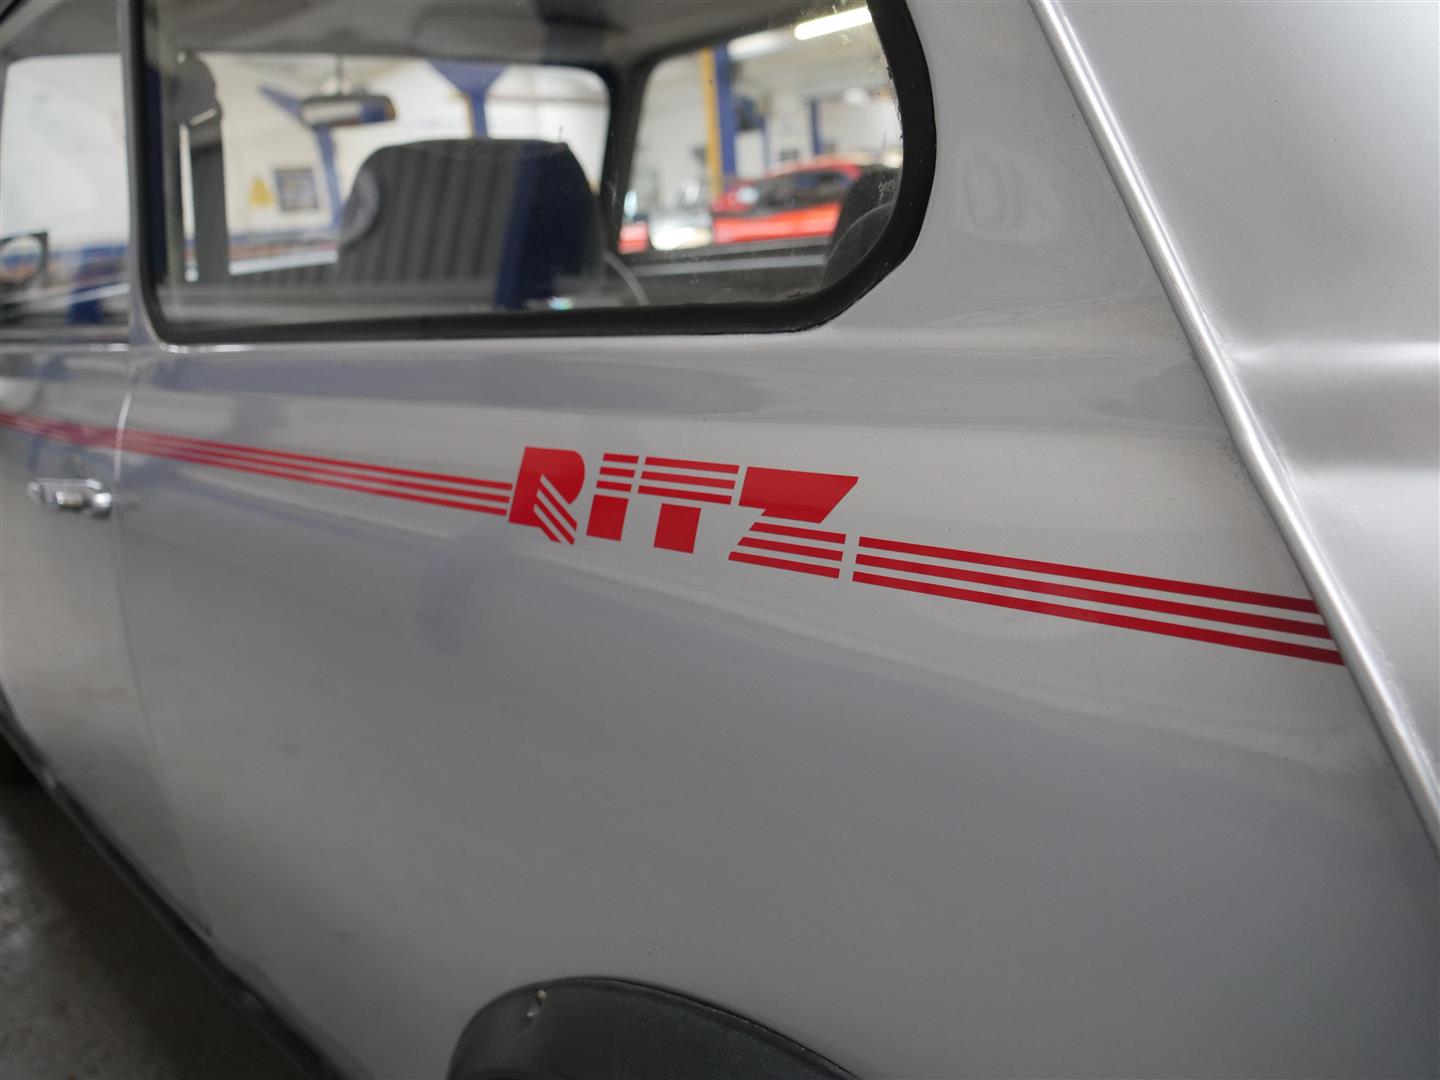 1985 Austin Mini Ritz - Image 12 of 19